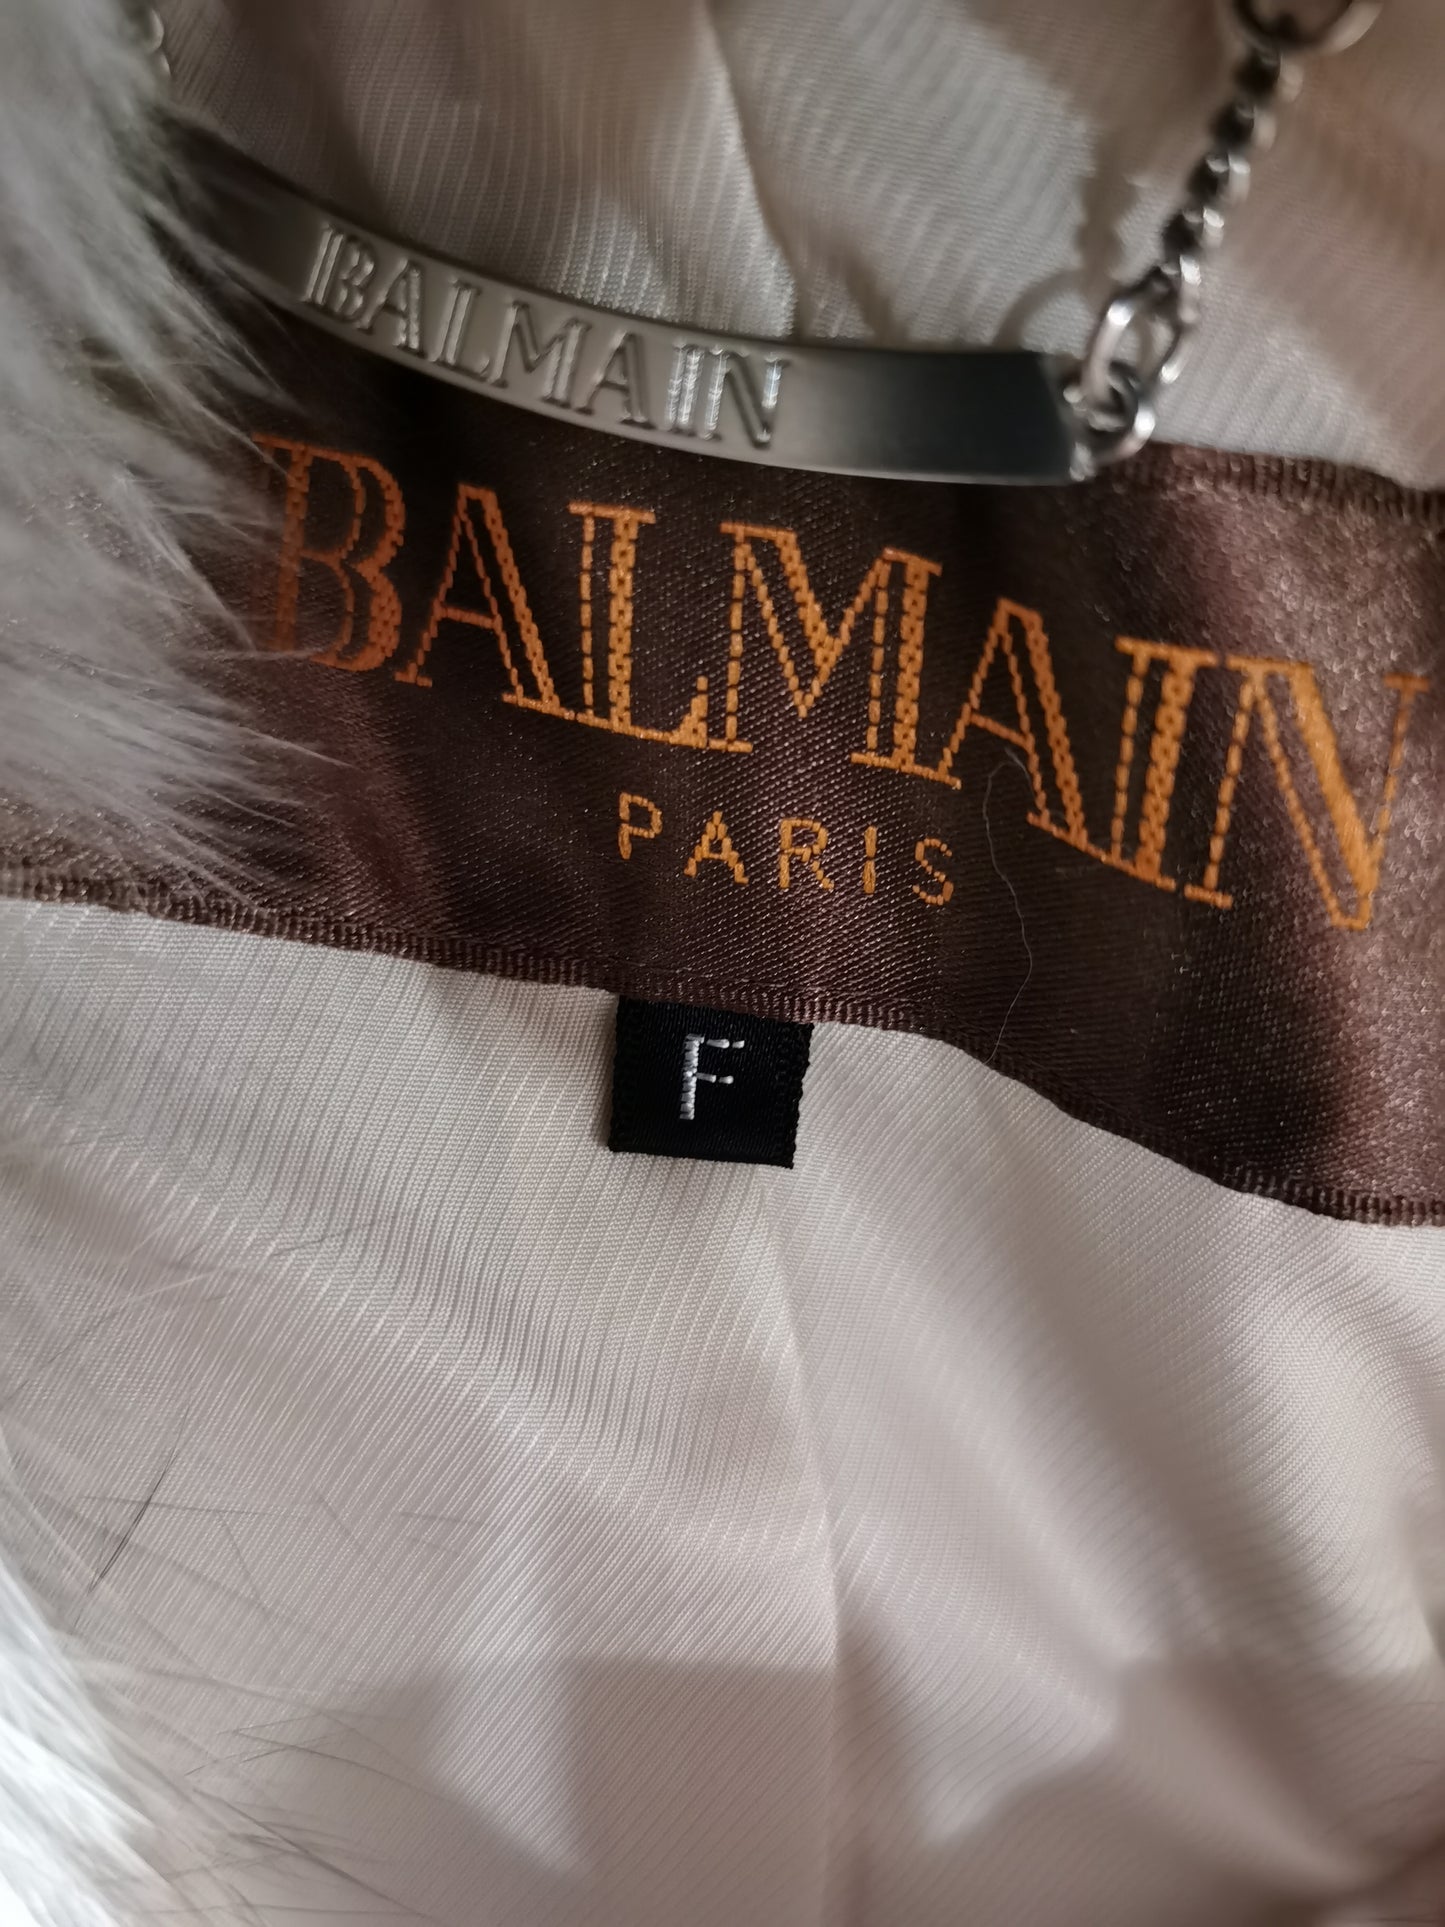 Clearance Balmain Cashmere Fur Coat New